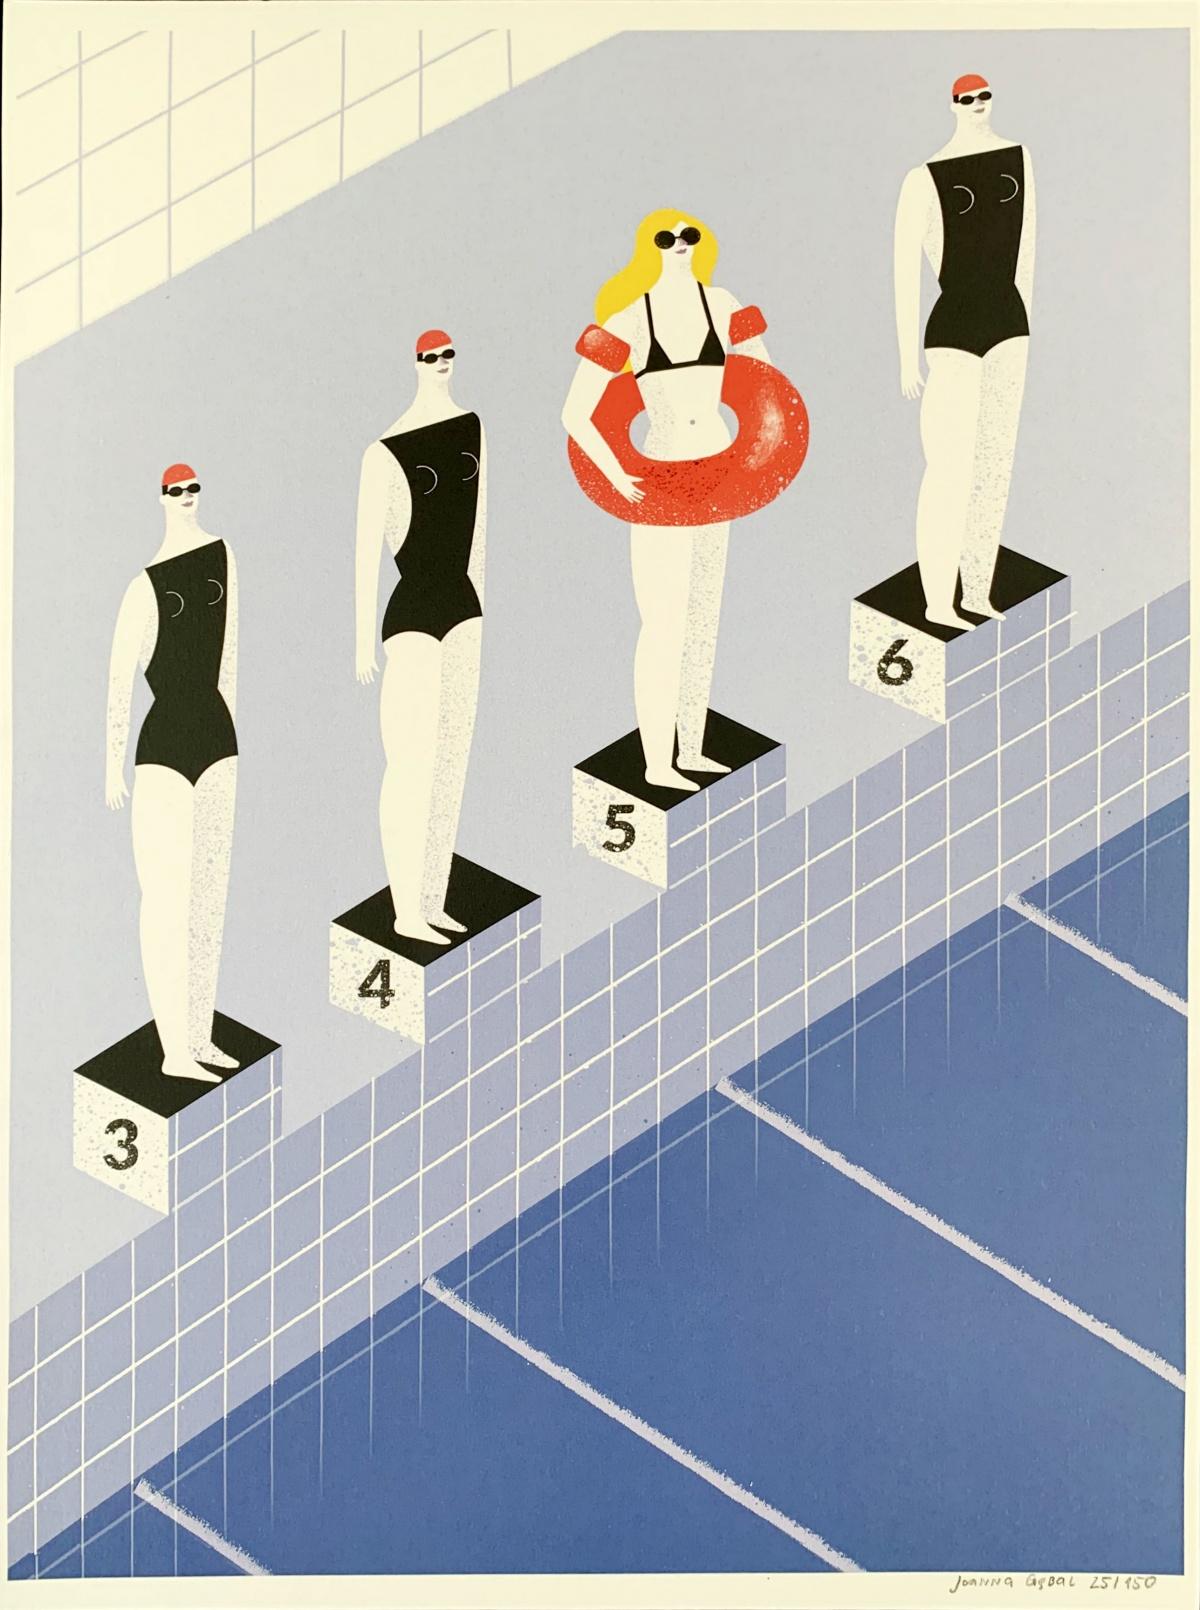 Swimmers - Digital print, Young art, Figurative art - Print by Joanna Gebal